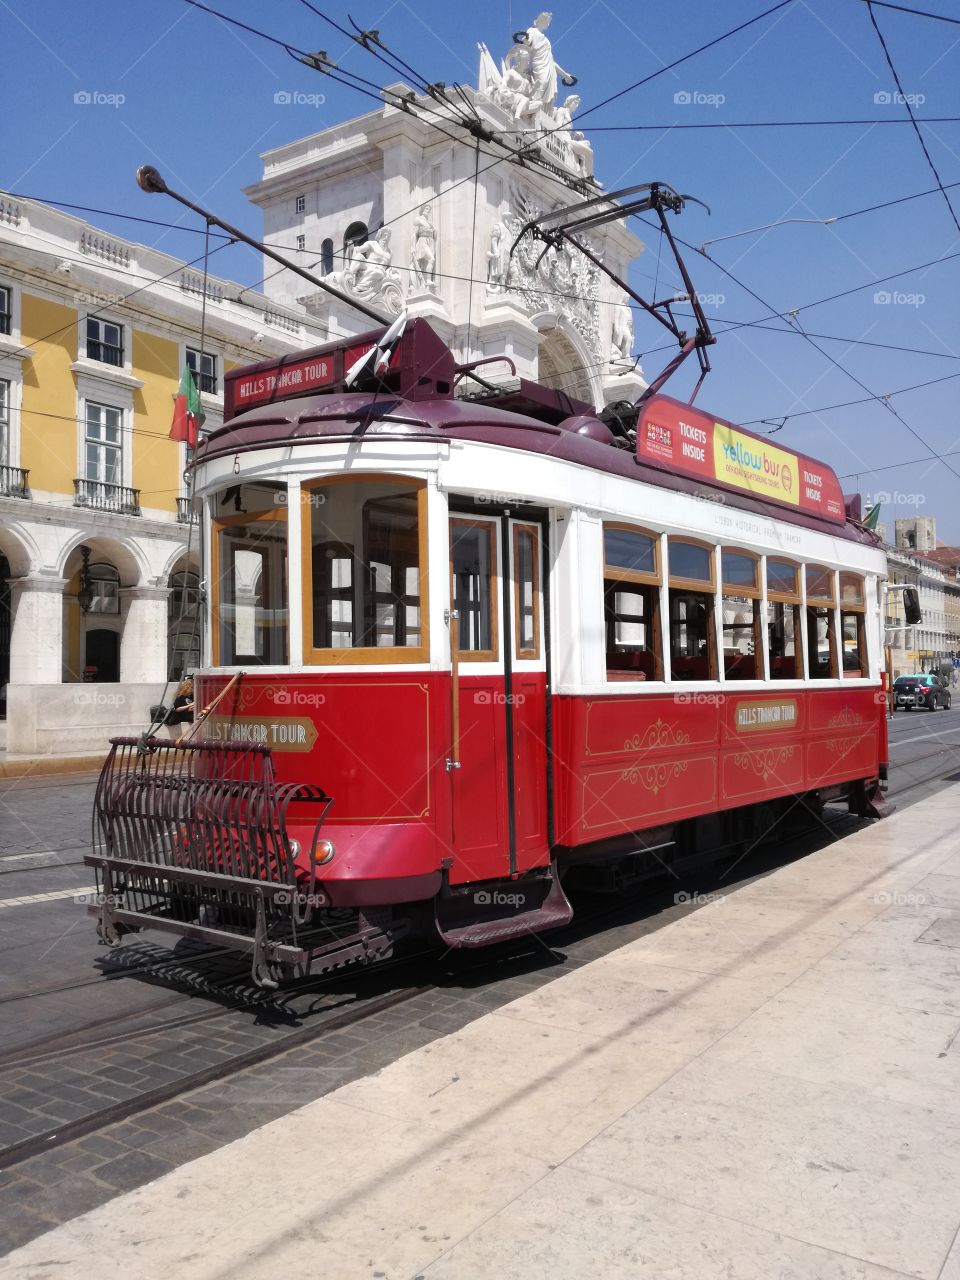 Red Tram in Lissabon Lisbon Lisboa Portugal
Red tram